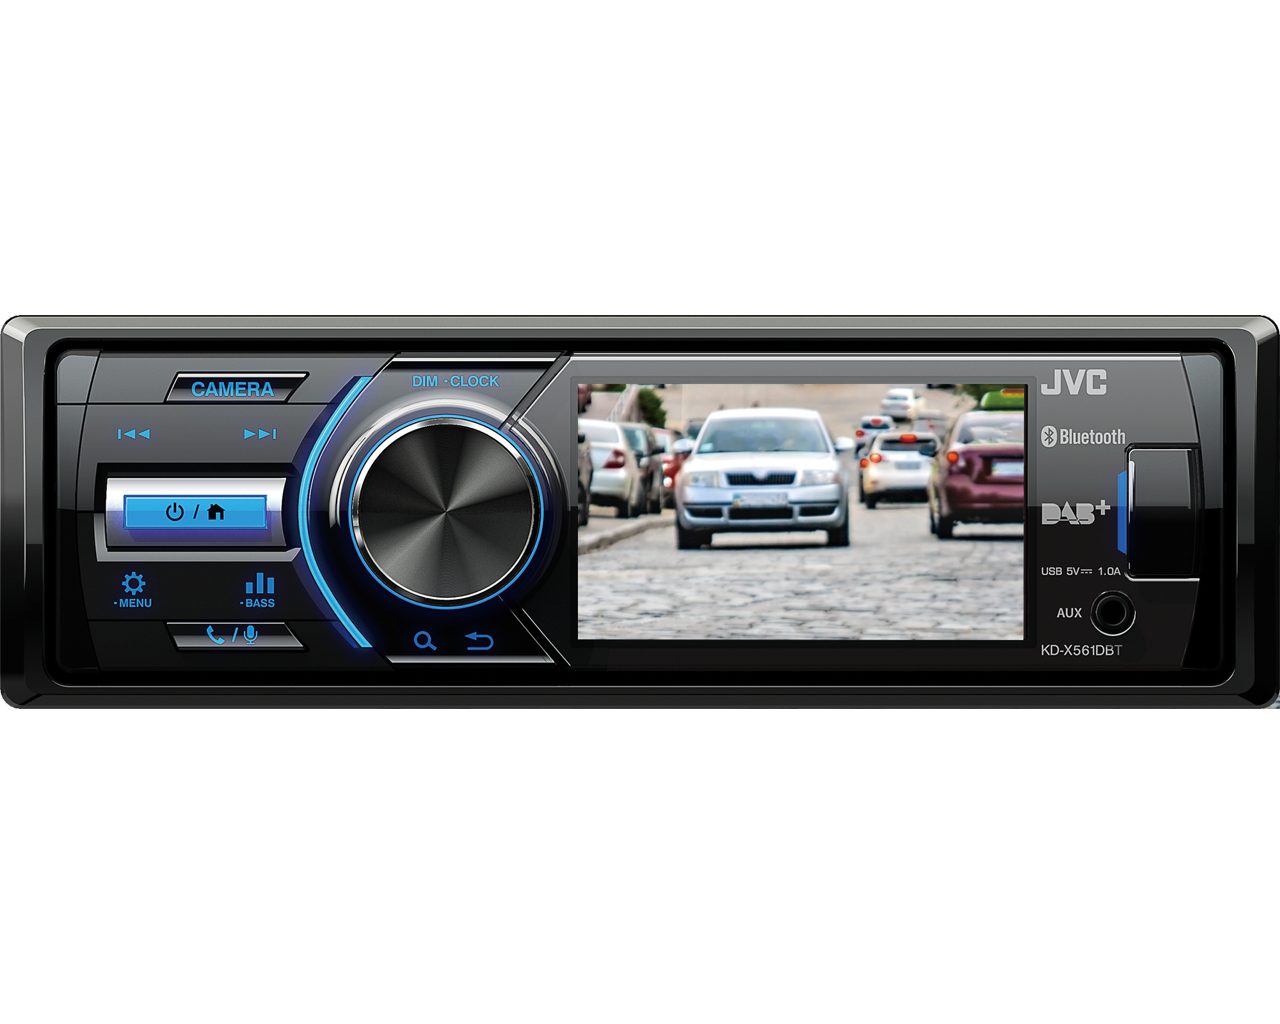 JVC III DSX TFT Radio (Digitalradio 45 W) (DAB), Autoradio für DAB+ Bluetooth Golf VW USB